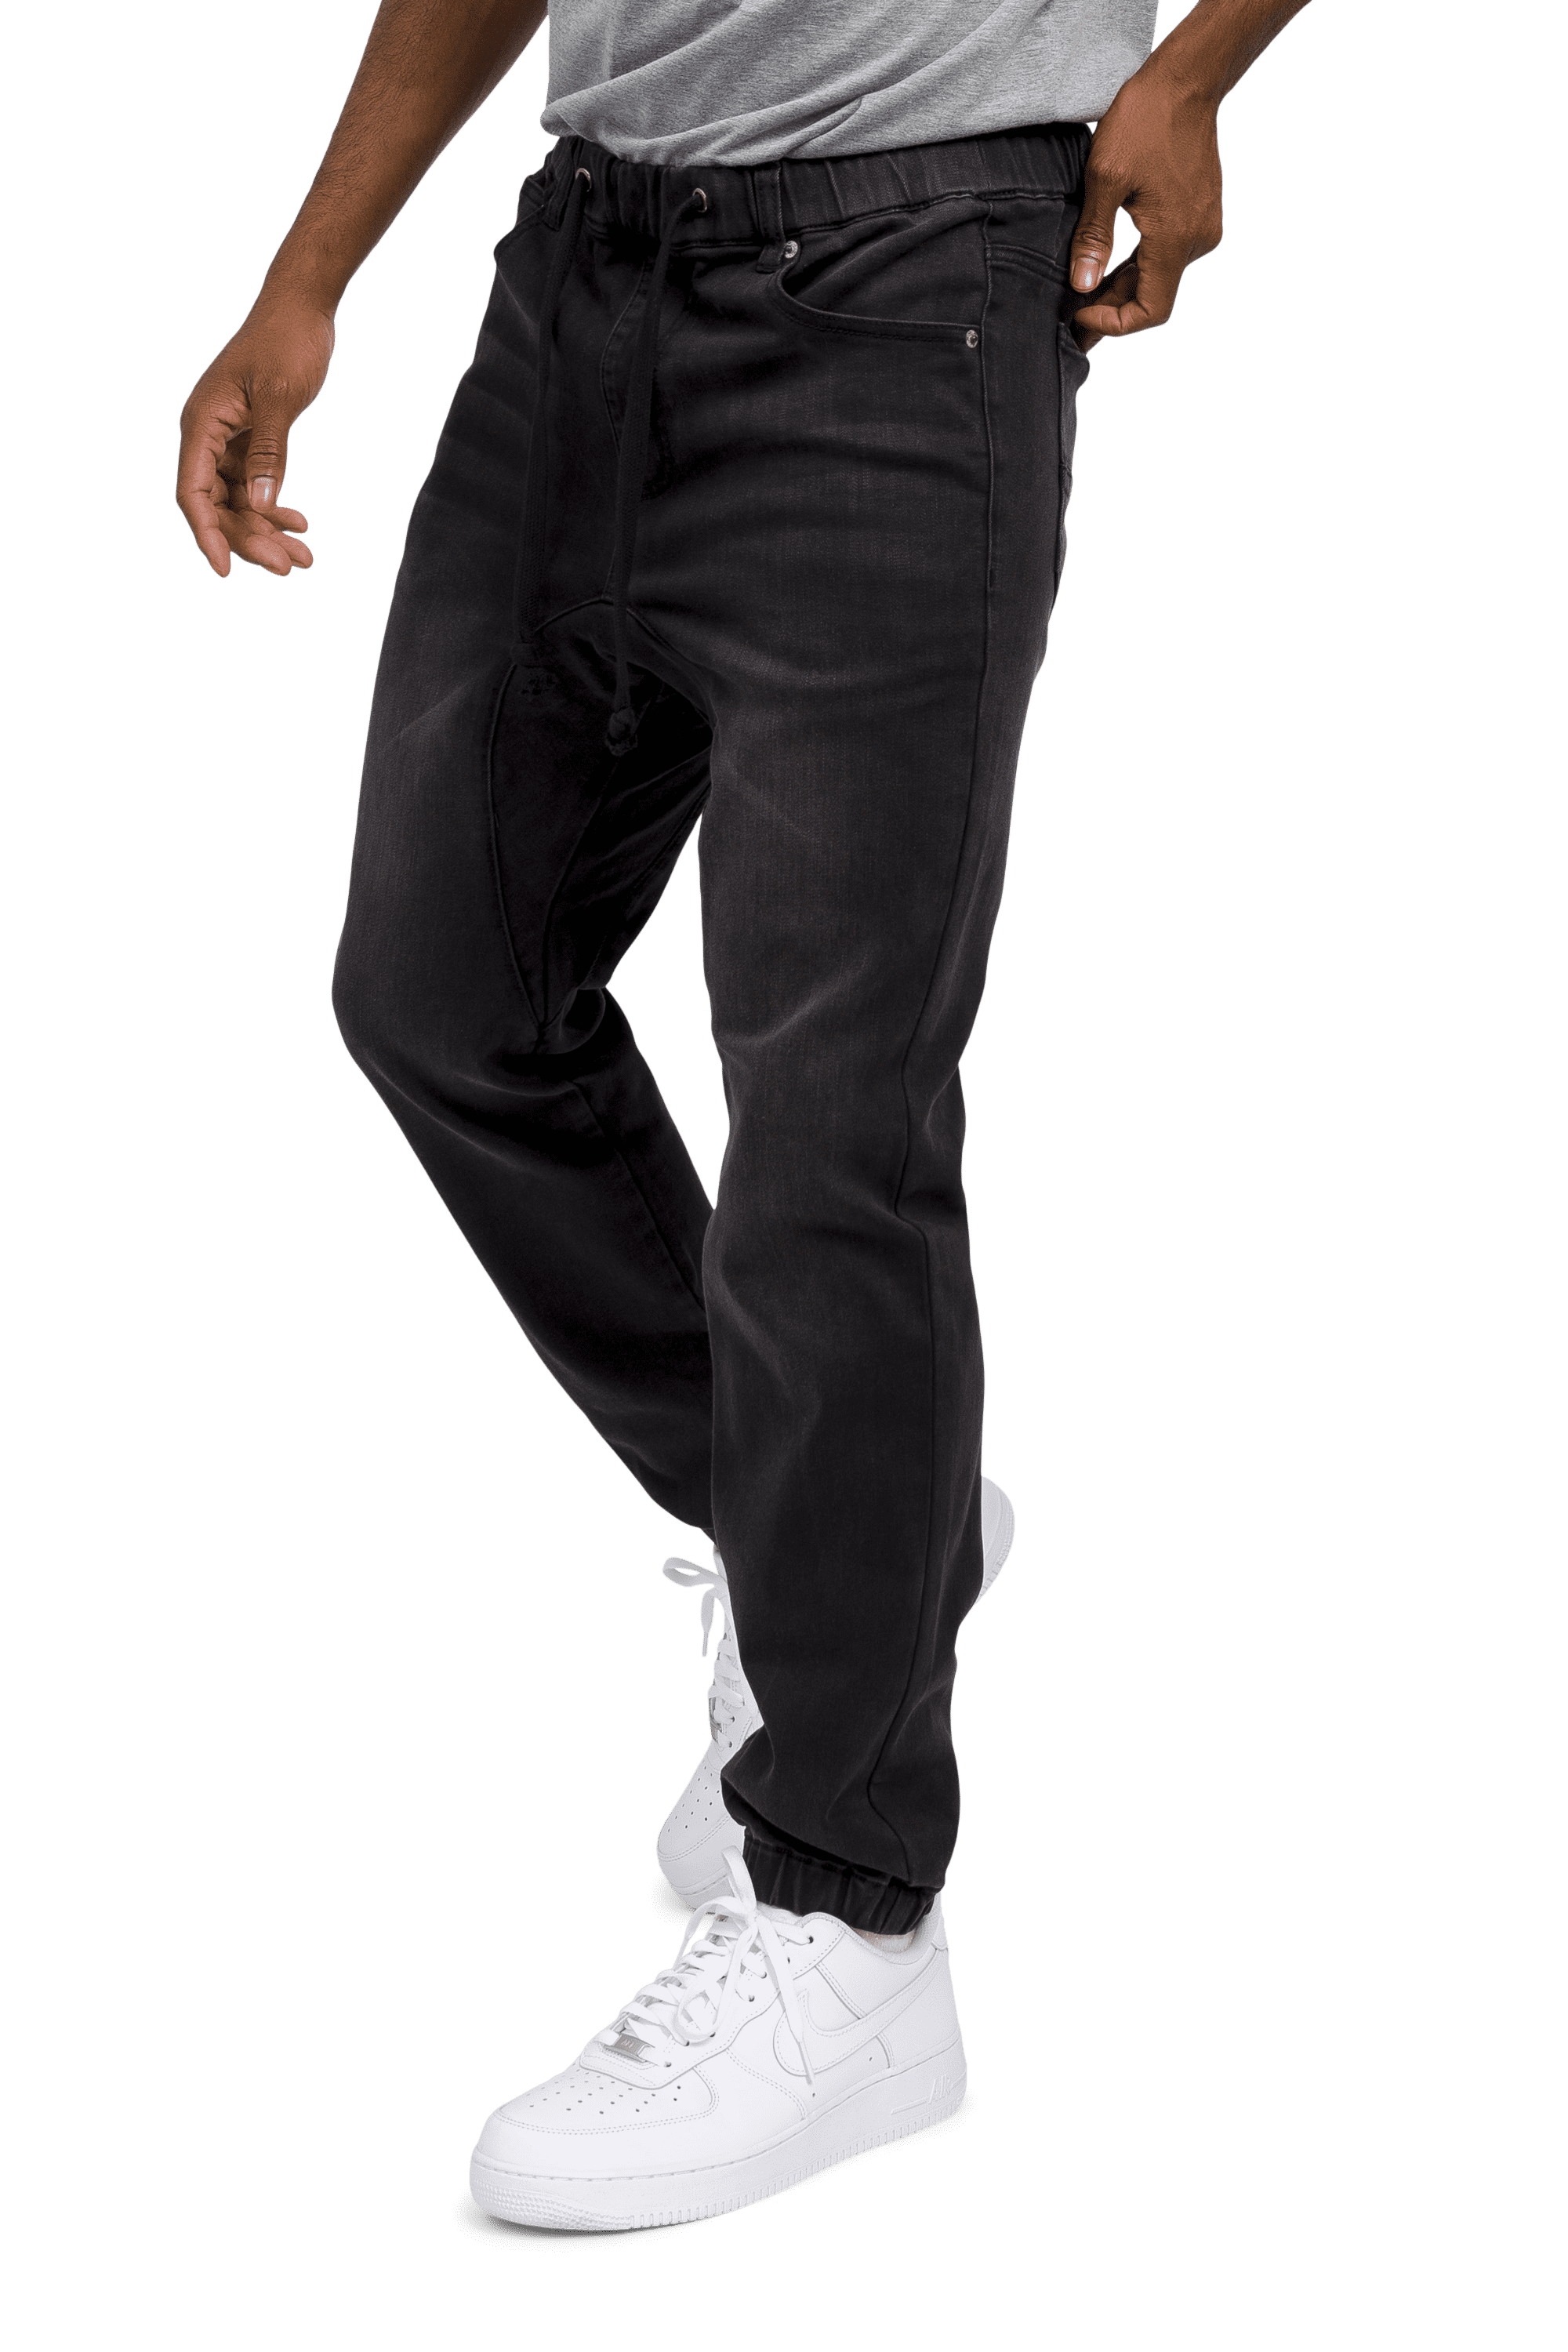 Victorious Pants Jogger - Mens Black - JG803 Denim 4X-Large Drop Crotch